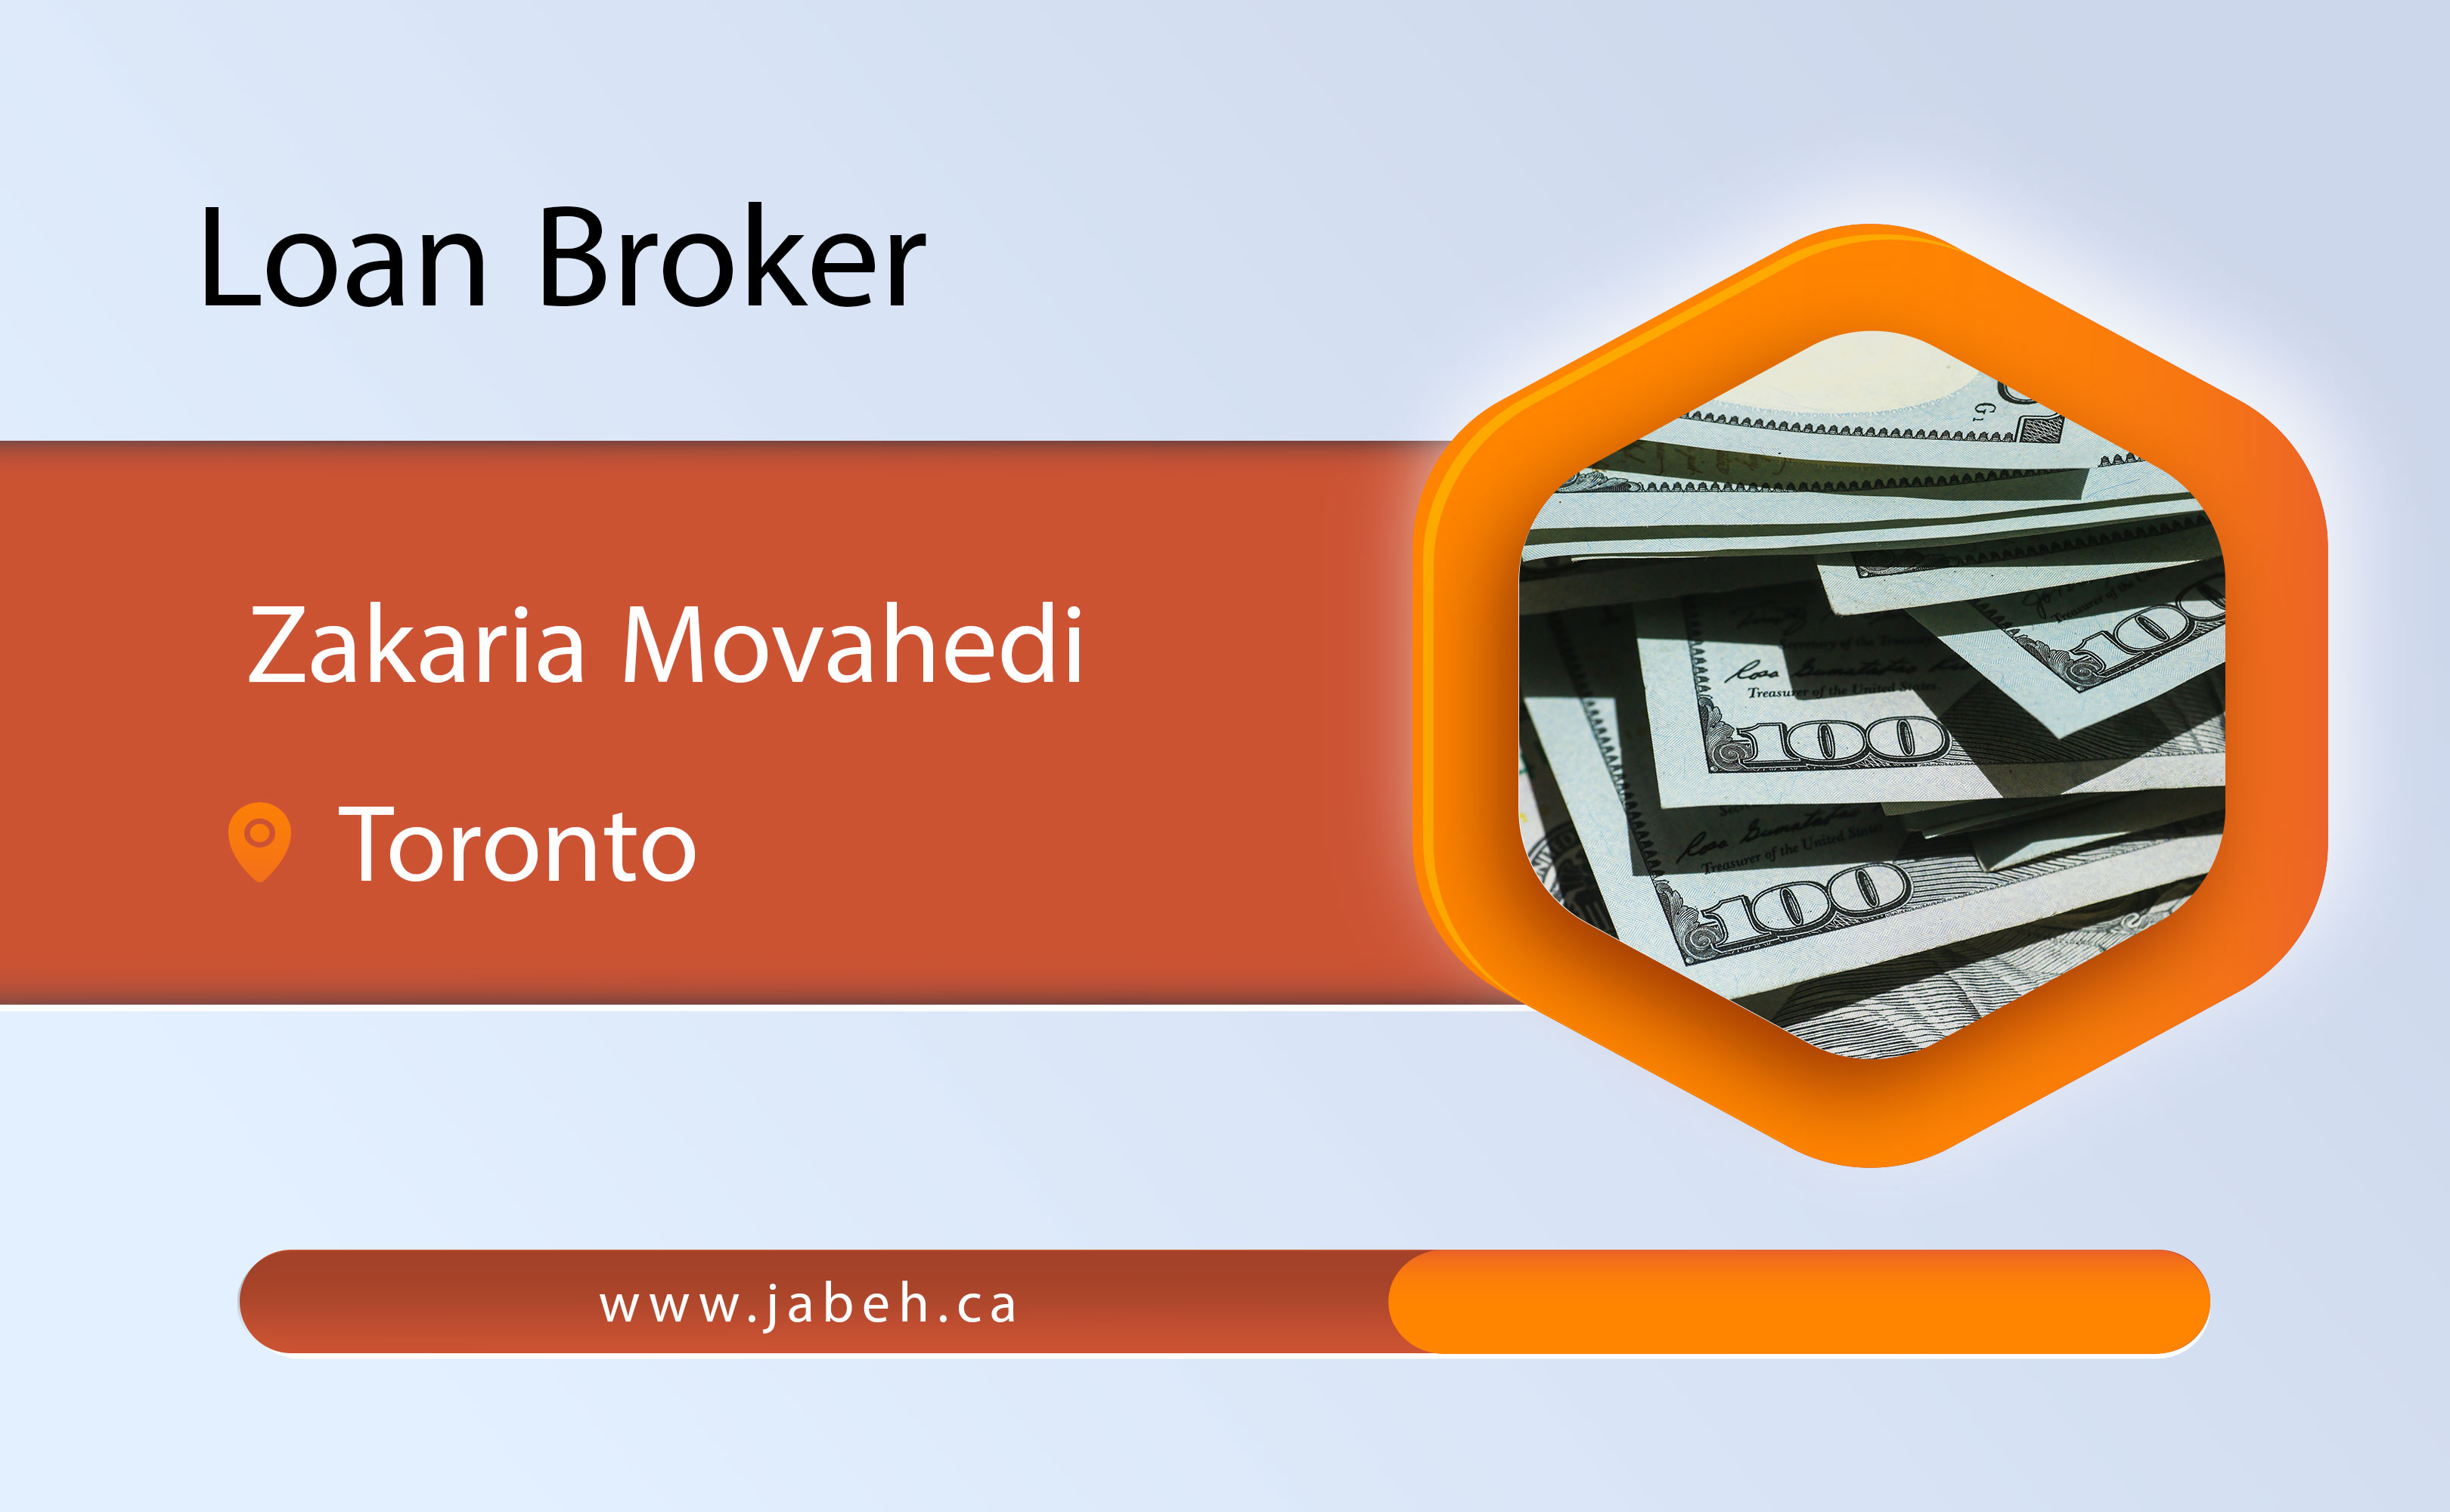 Zakaria Mohadi loan broker in Toronto